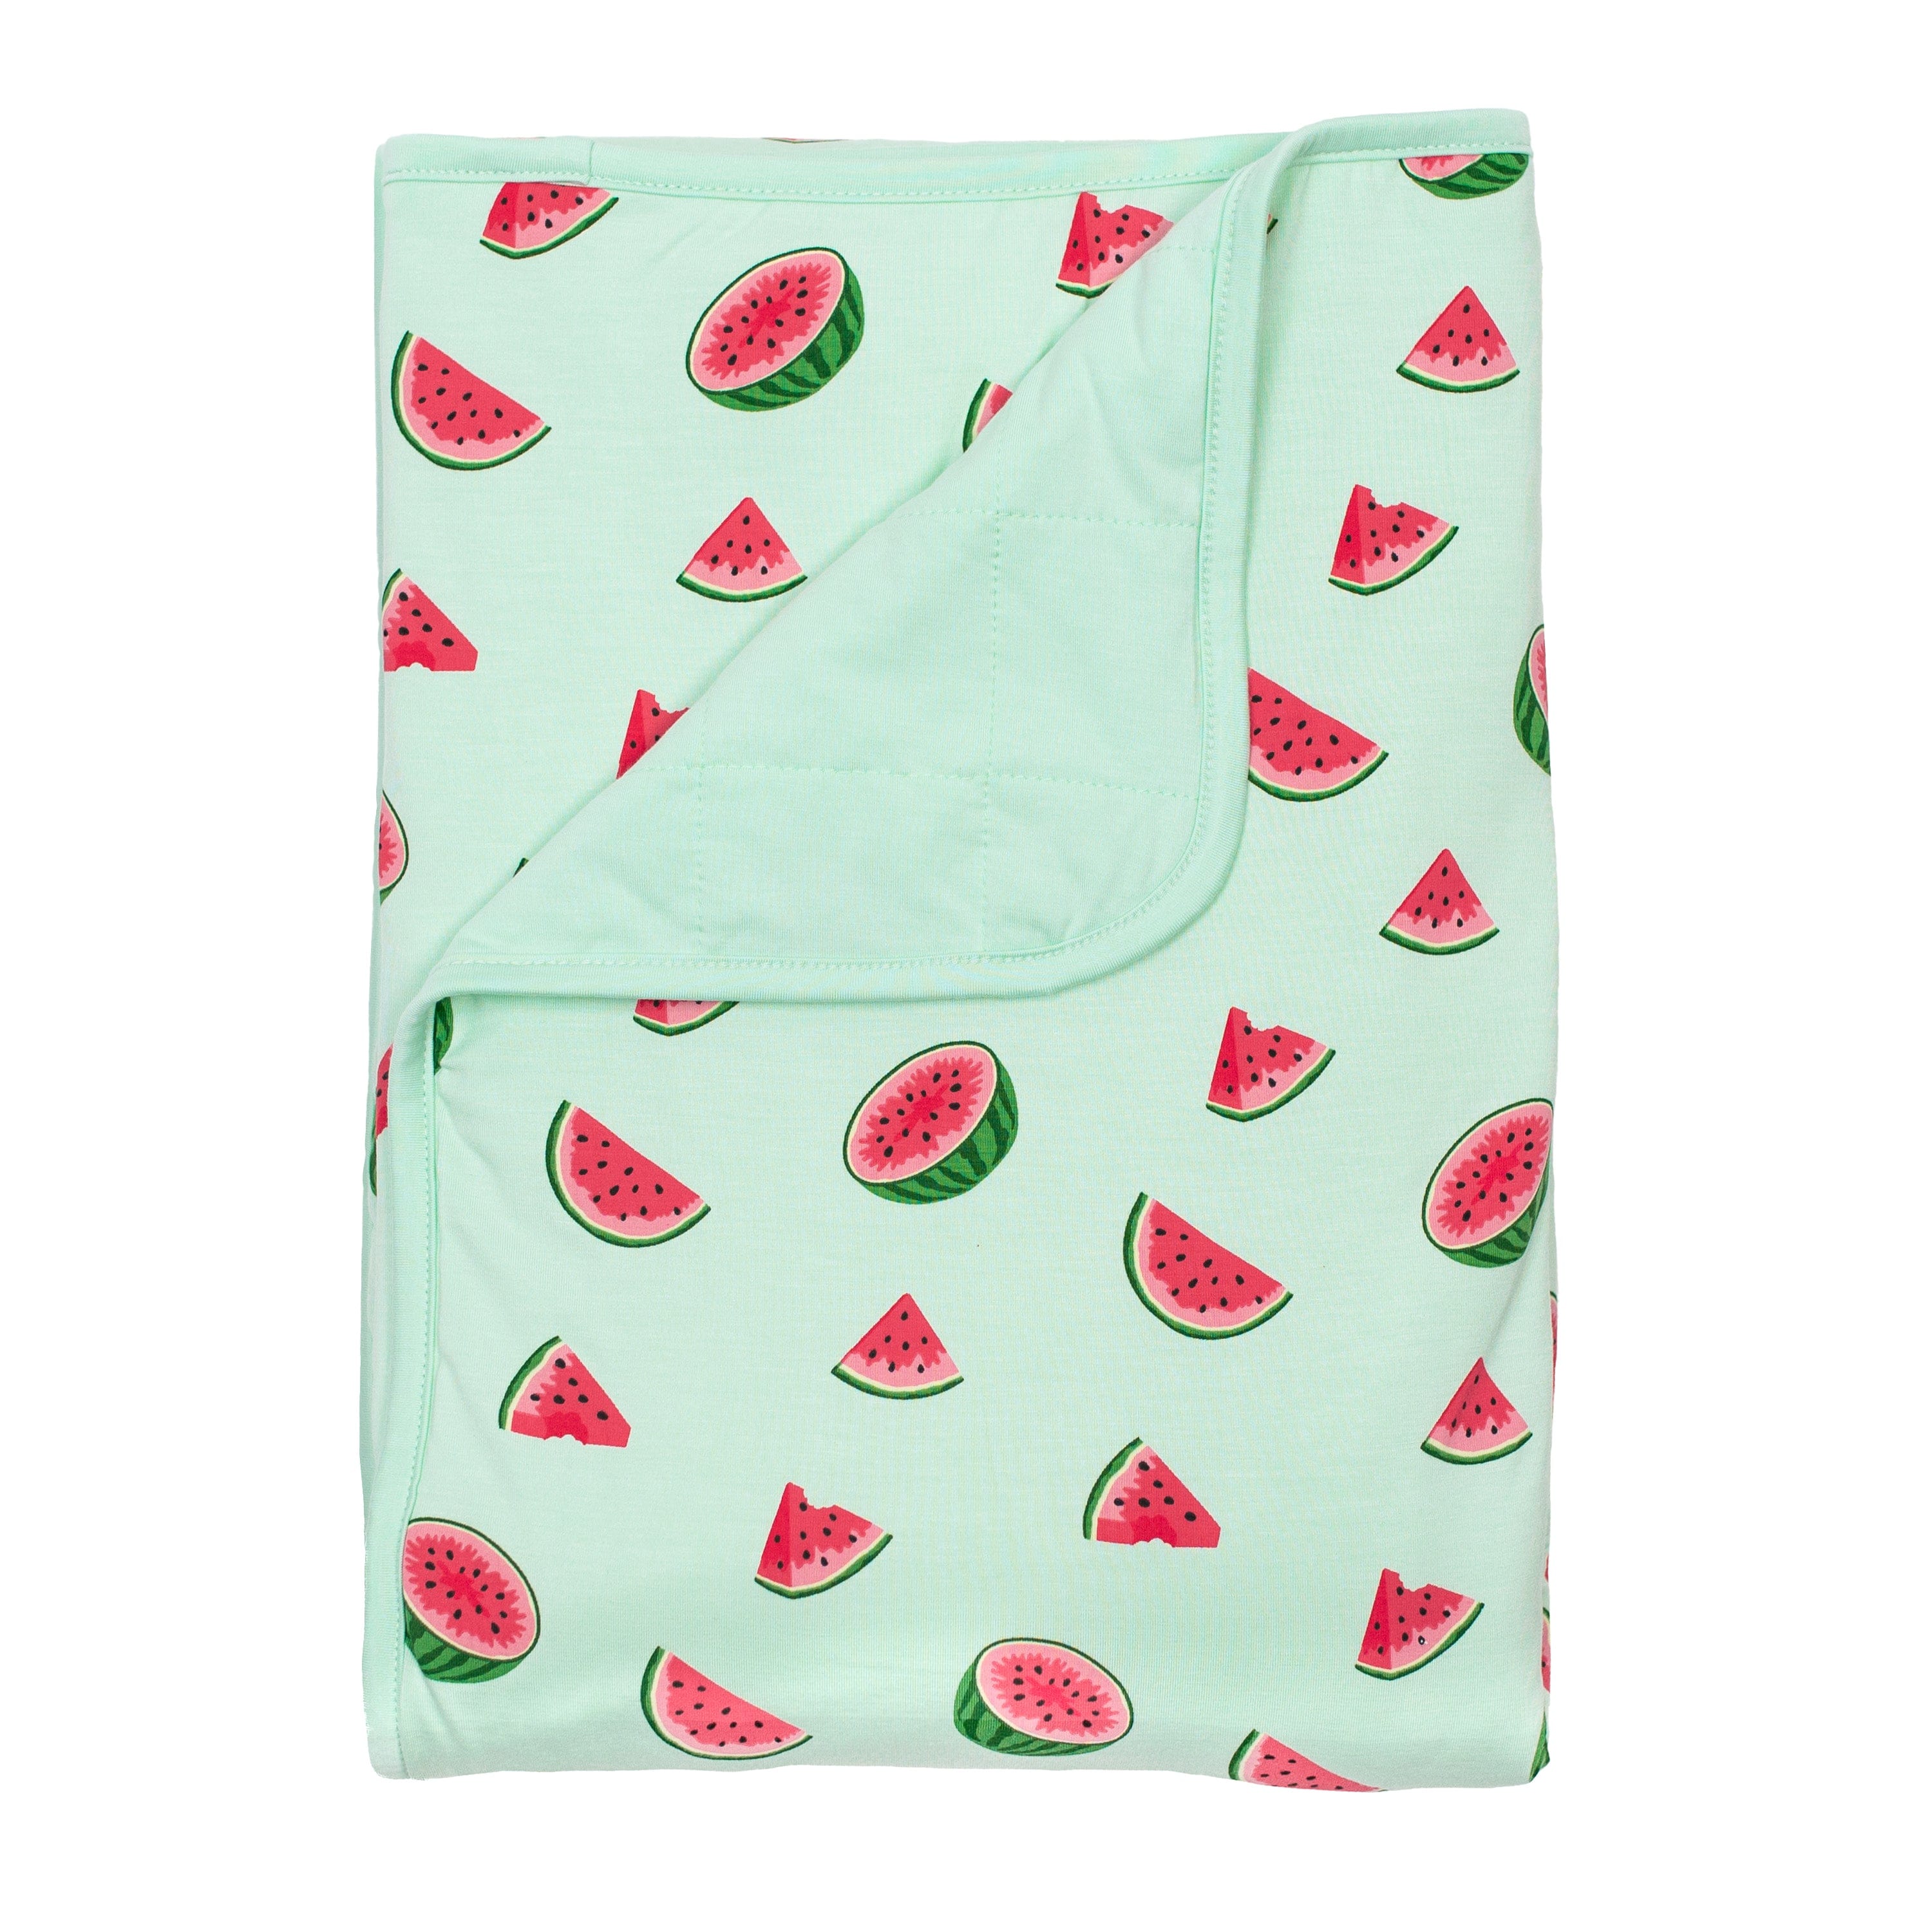 Kyte Baby Toddler Blanket 1.0 Tog Watermelon / Toddler Toddler Blanket in Watermelon 1.0